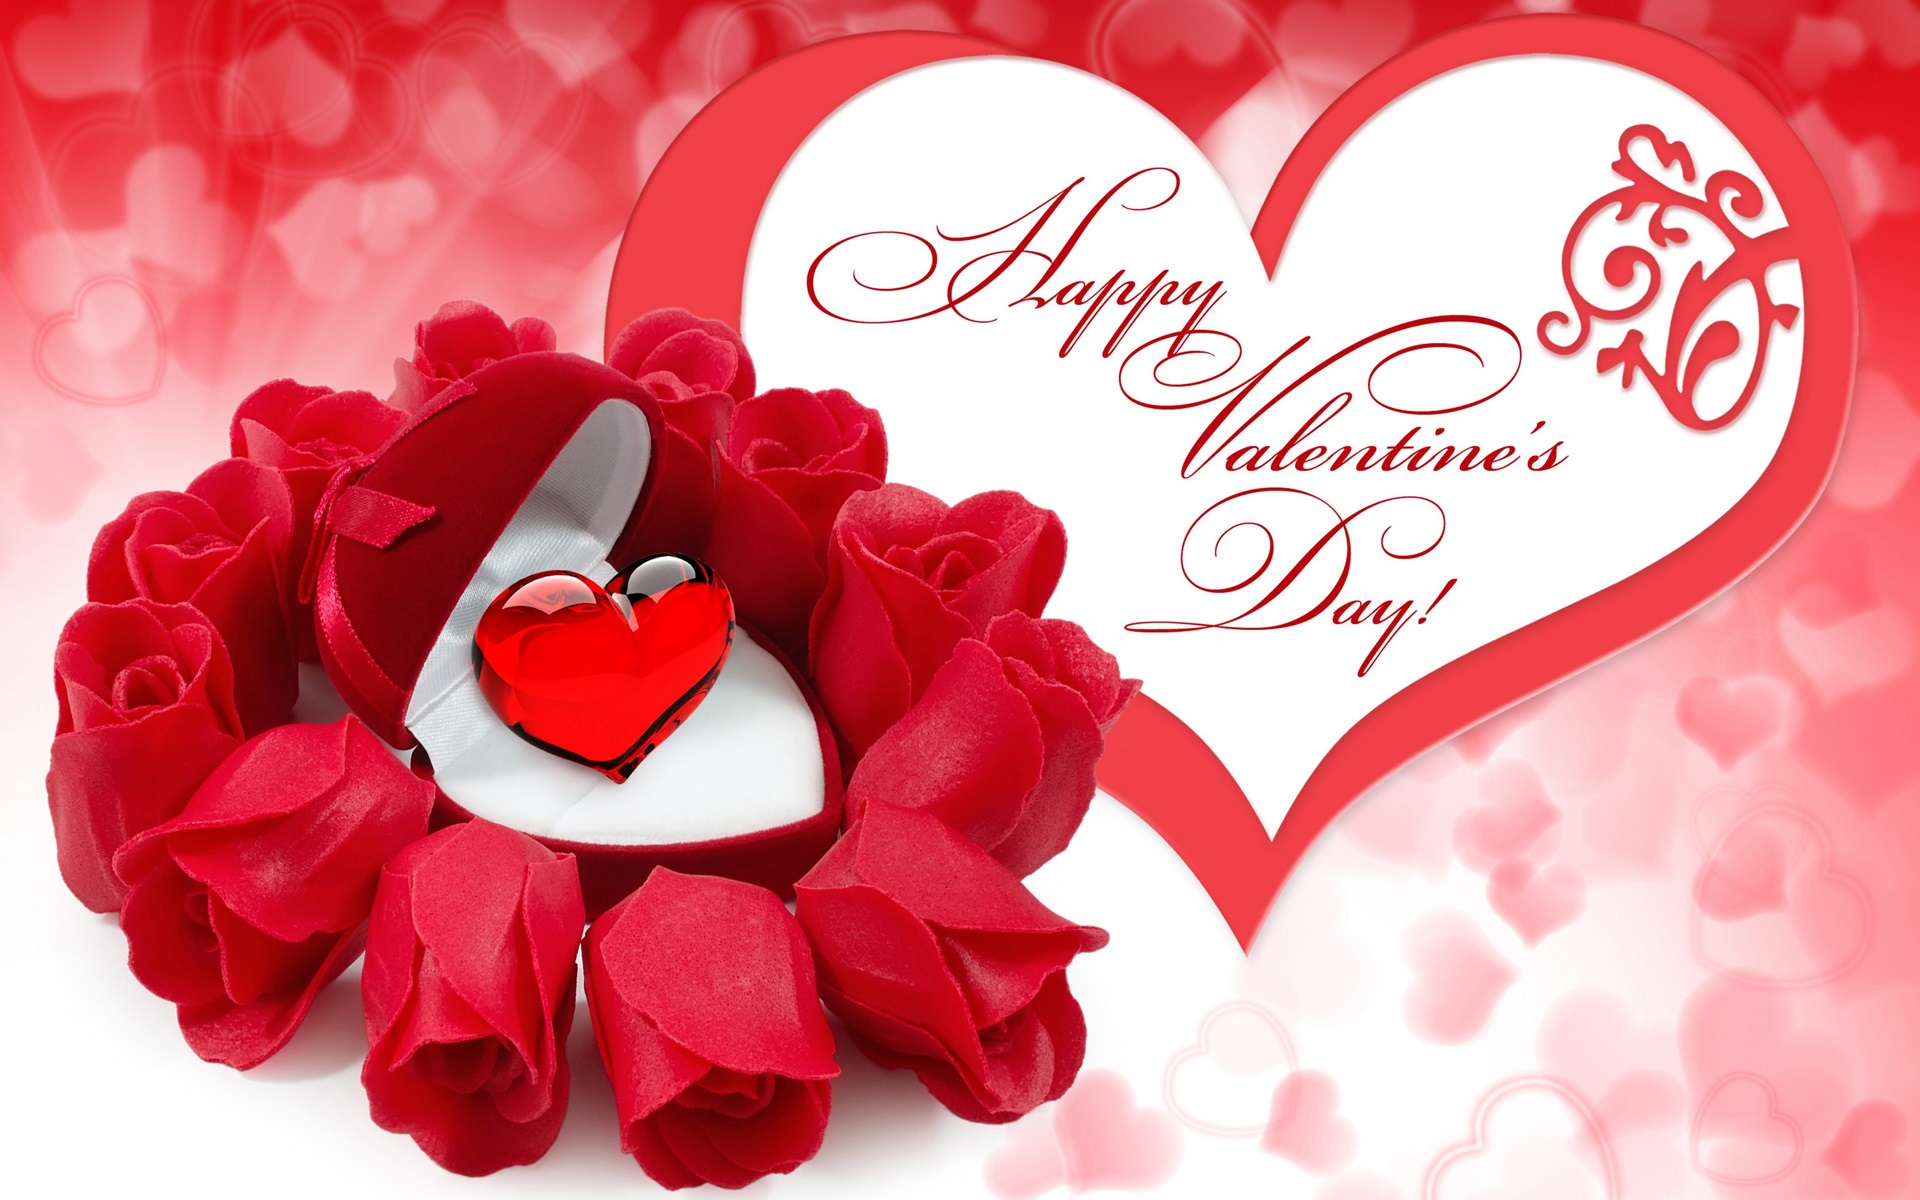 Happy-Valentine-s-Day-red-rose-flowers-ruby_1920x1200.jpg